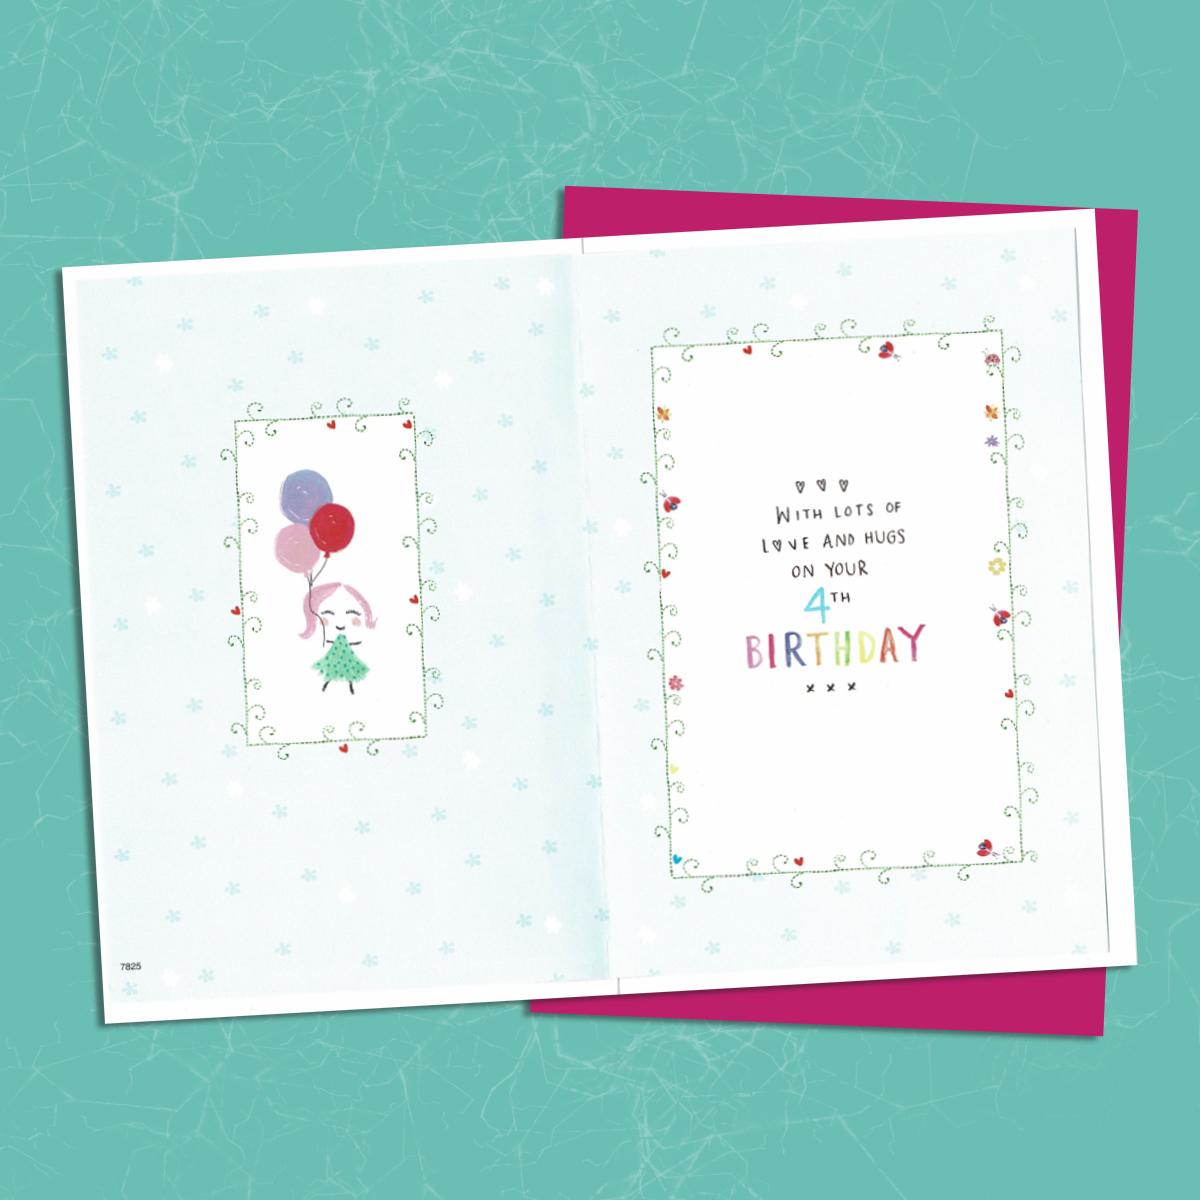 Age 4 Granddaughter Birthday Card Alongside Its Pink Envelope